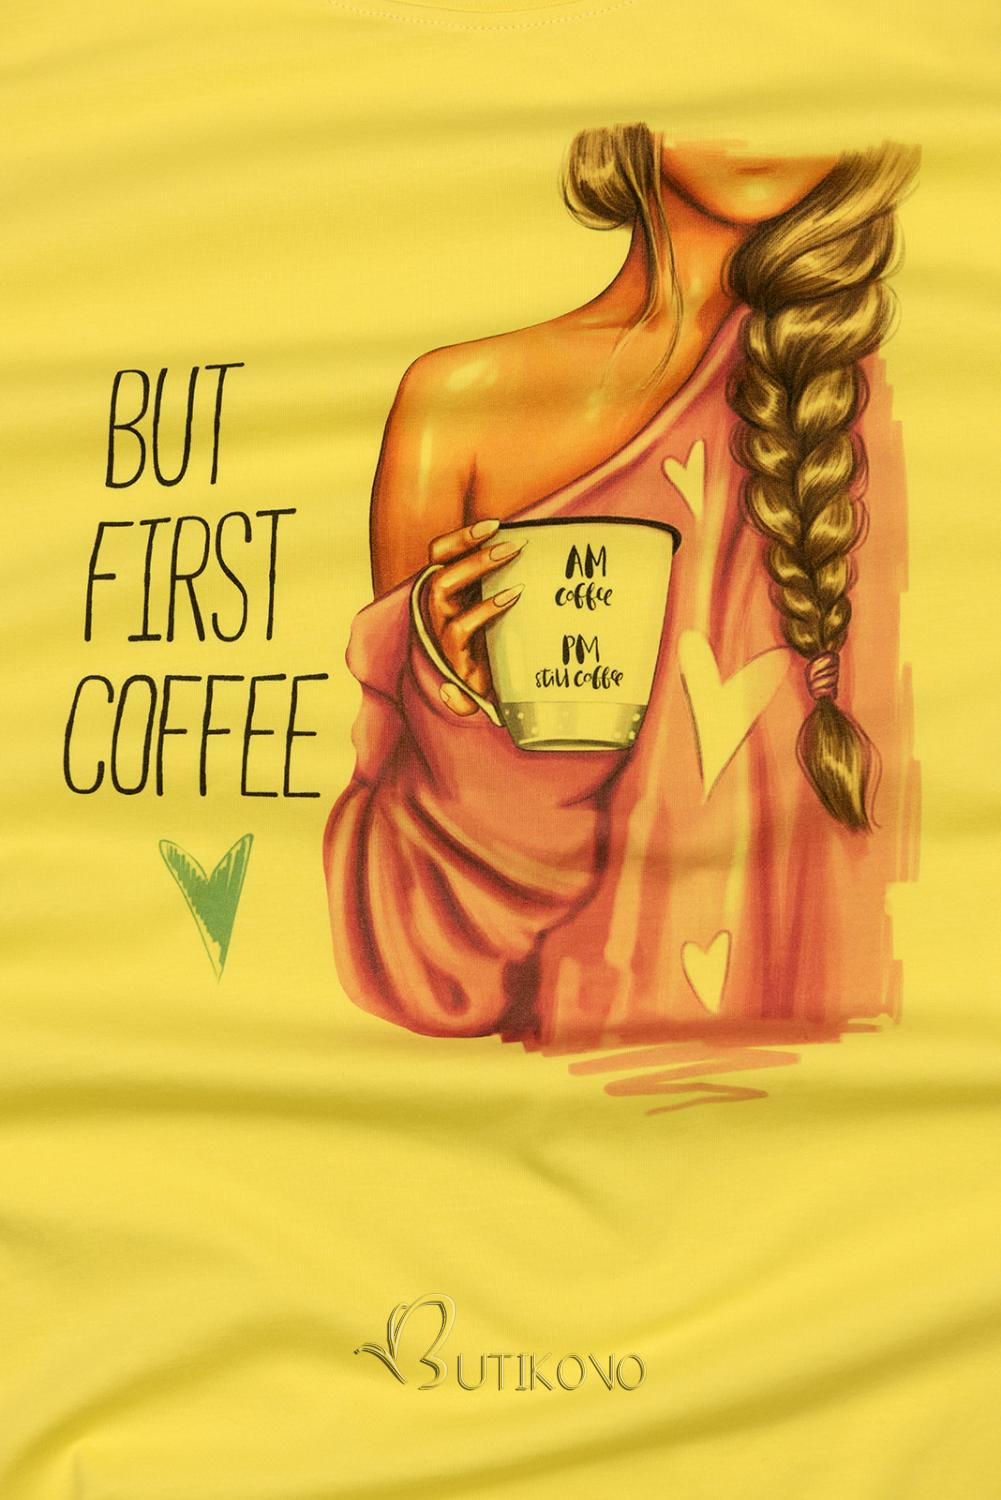 Žlté oversized šaty BUT FIRST COFFEE